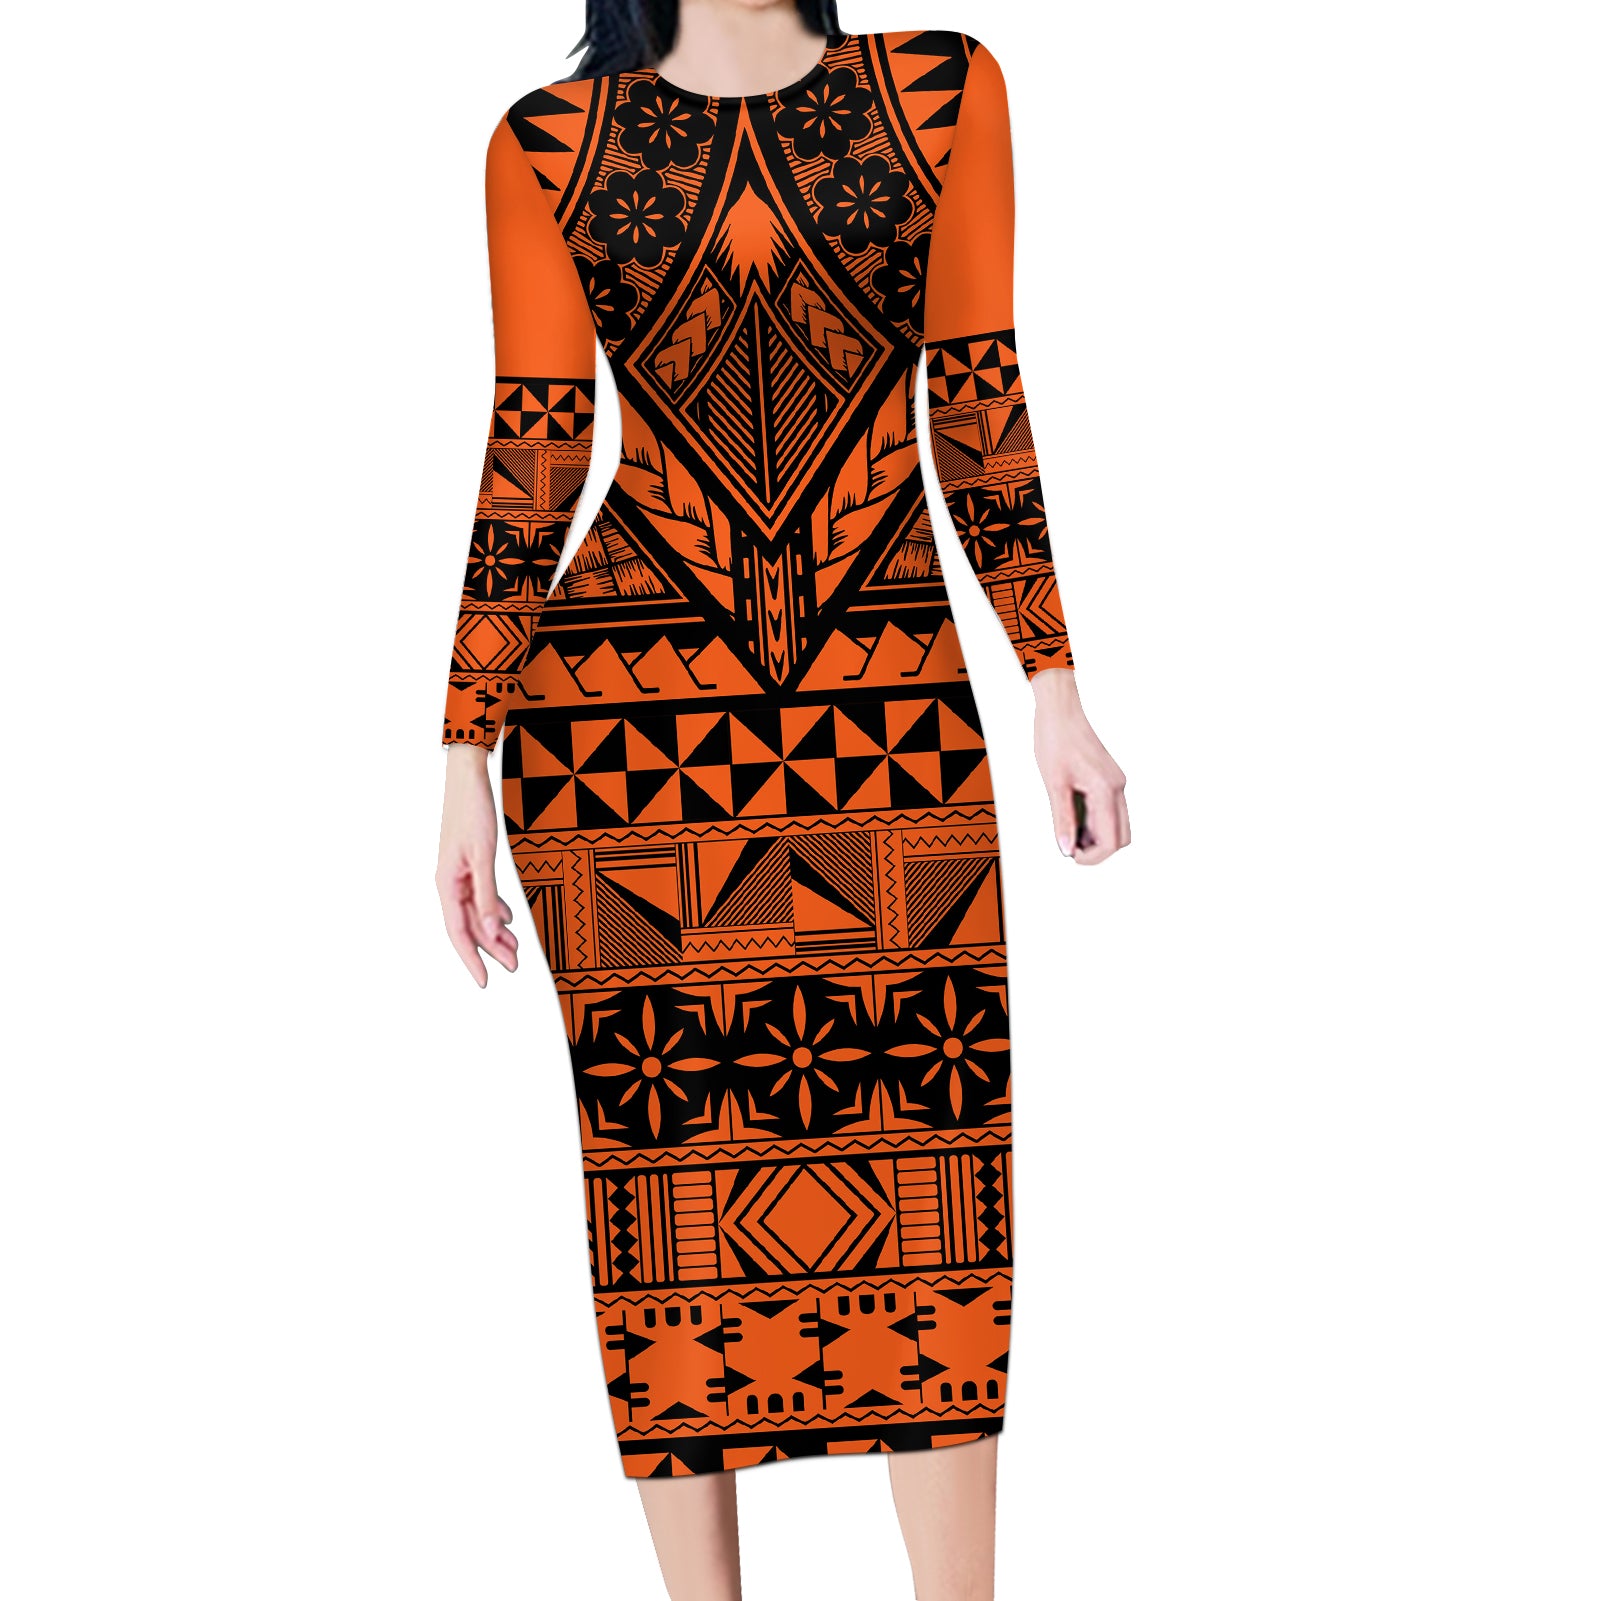 Halo Olaketa Solomon Islands Long Sleeve Bodycon Dress Melanesian Tribal Pattern Orange Version LT14 Long Dress Orange - Polynesian Pride